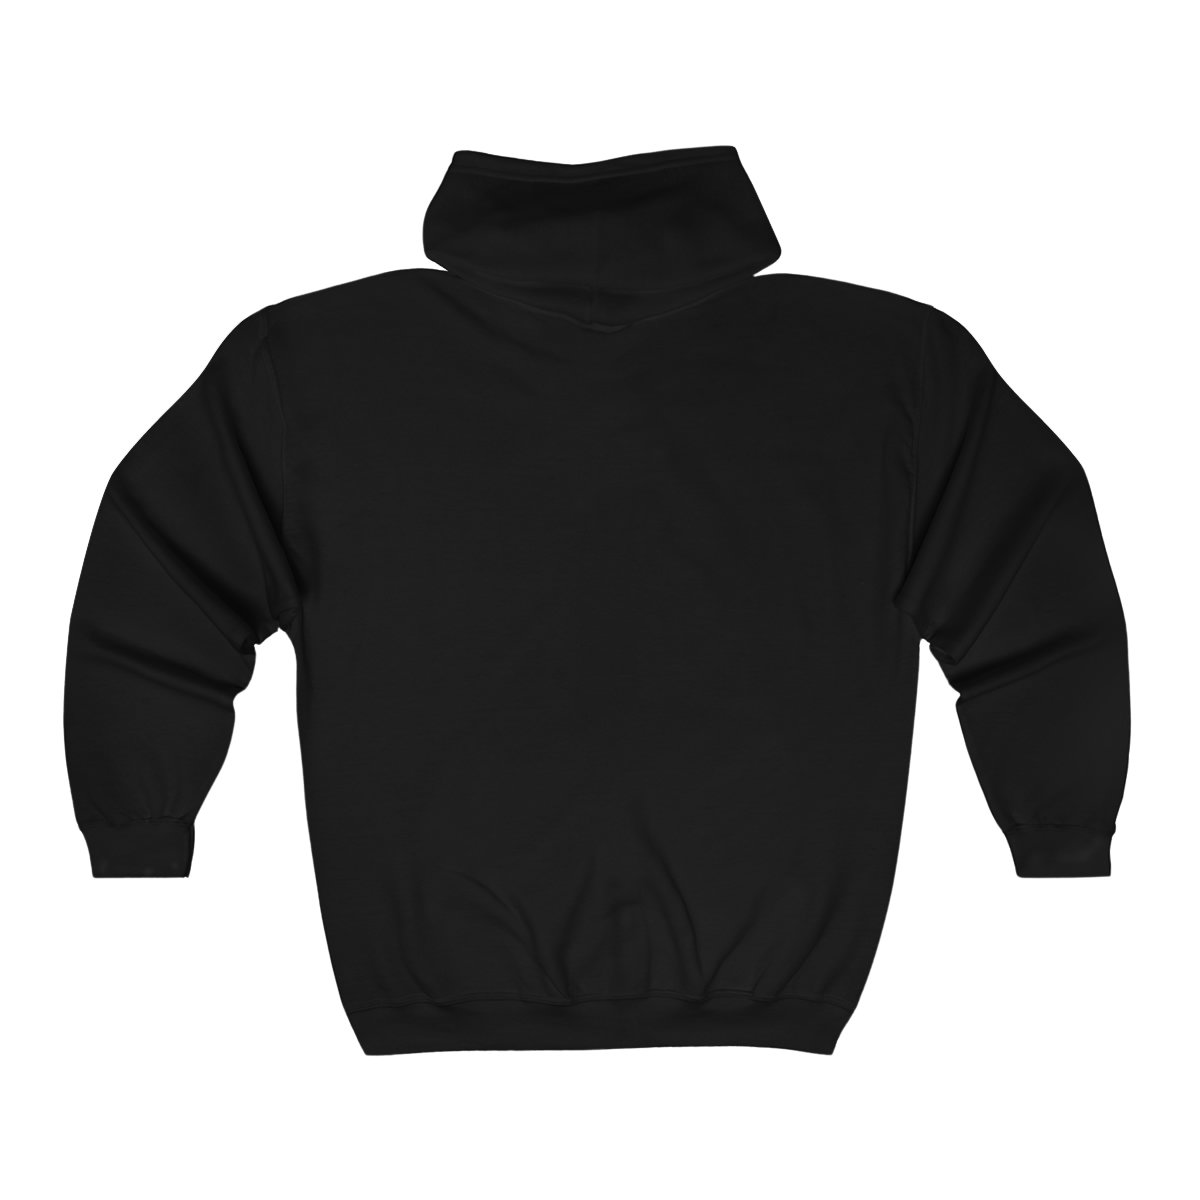 Sanctuary International – Agape Full Zip Hooded Sweatshirt